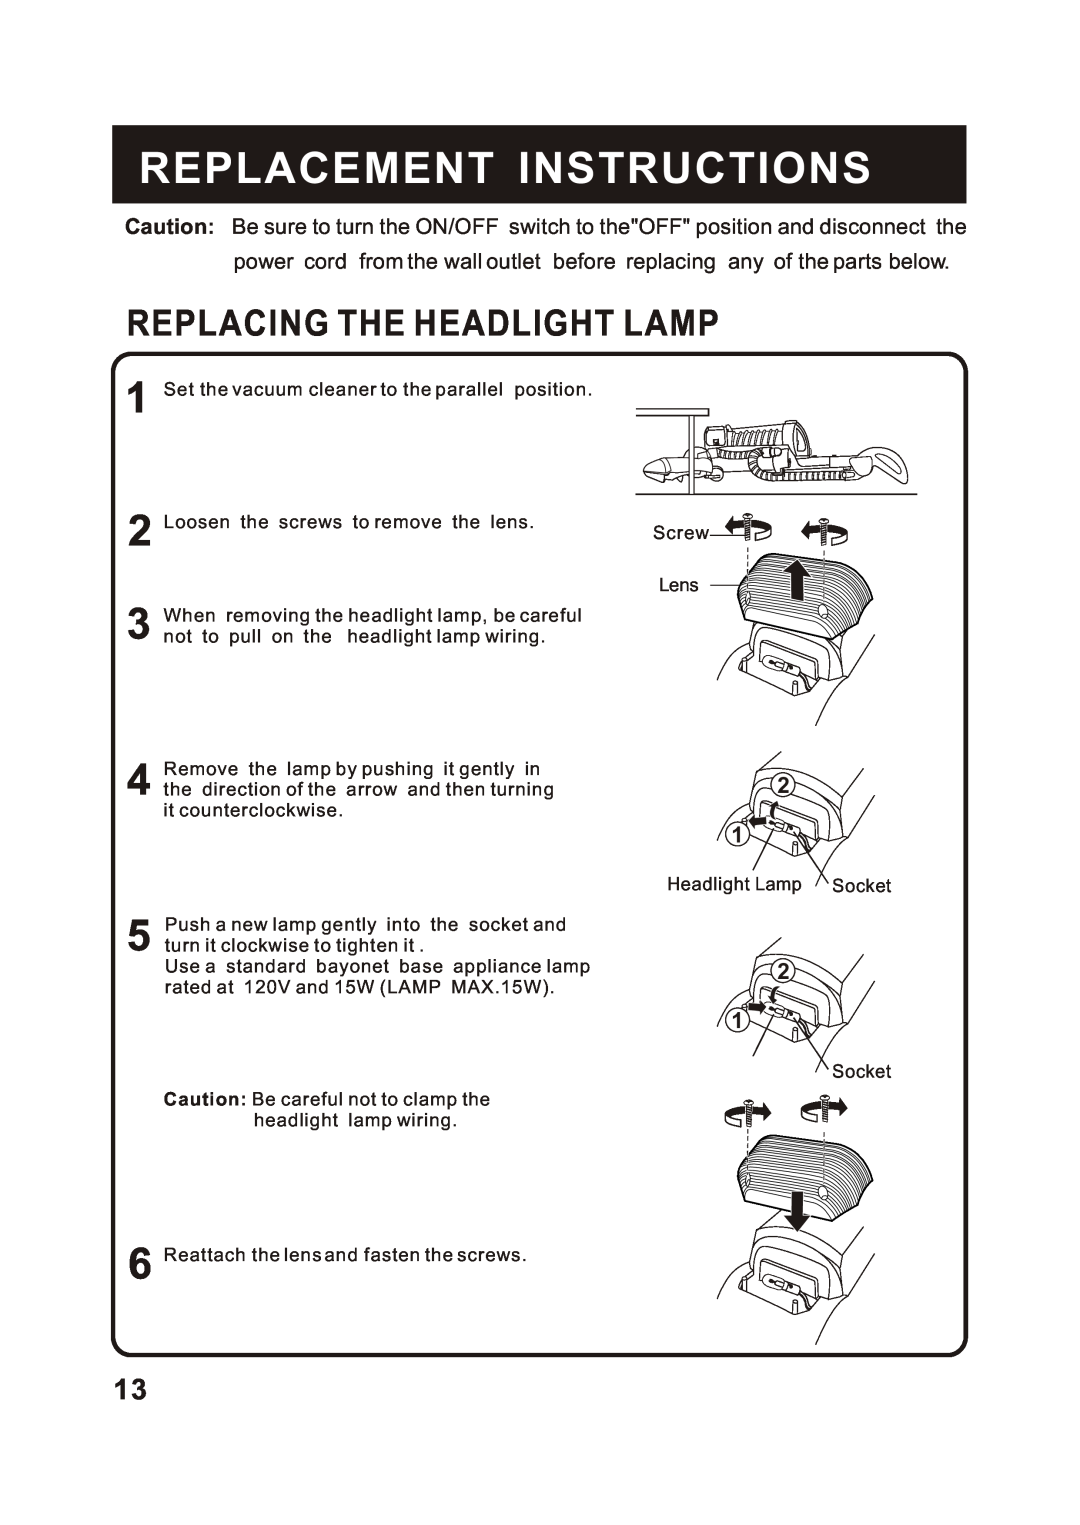 Fantom Vacuum FM788HC, FM788HG, FM788HB instruction manual Replacement Instructions, Replacing The Headlight Lamp 